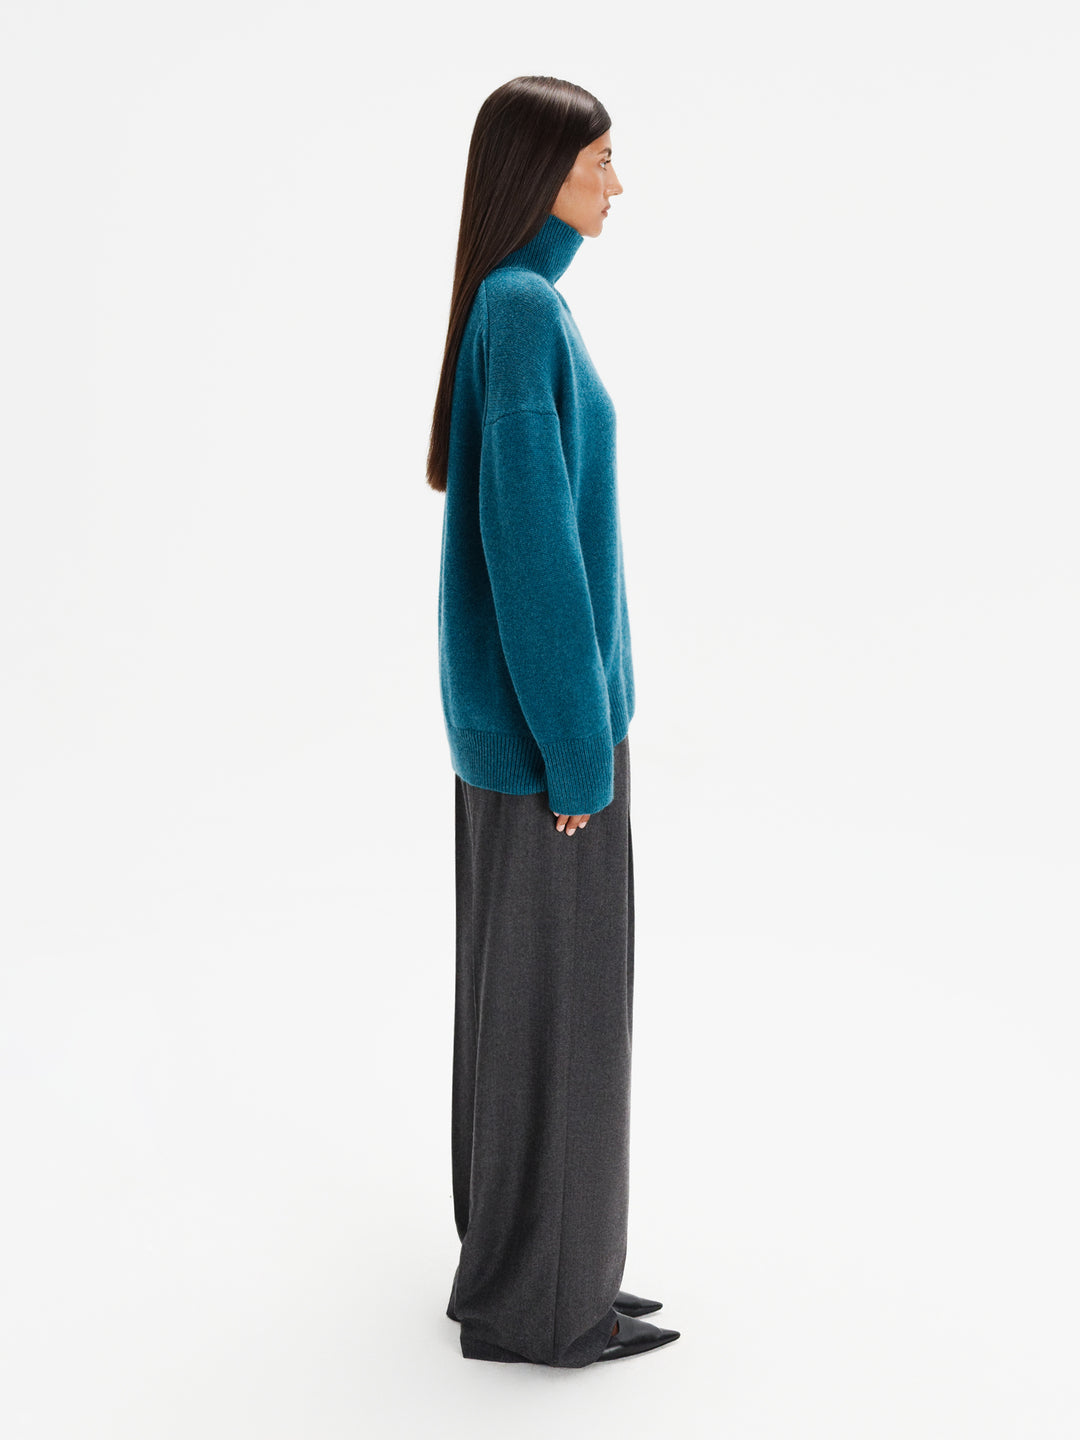 Lora turtleneck 100% cashmere sweater (aquamarine)